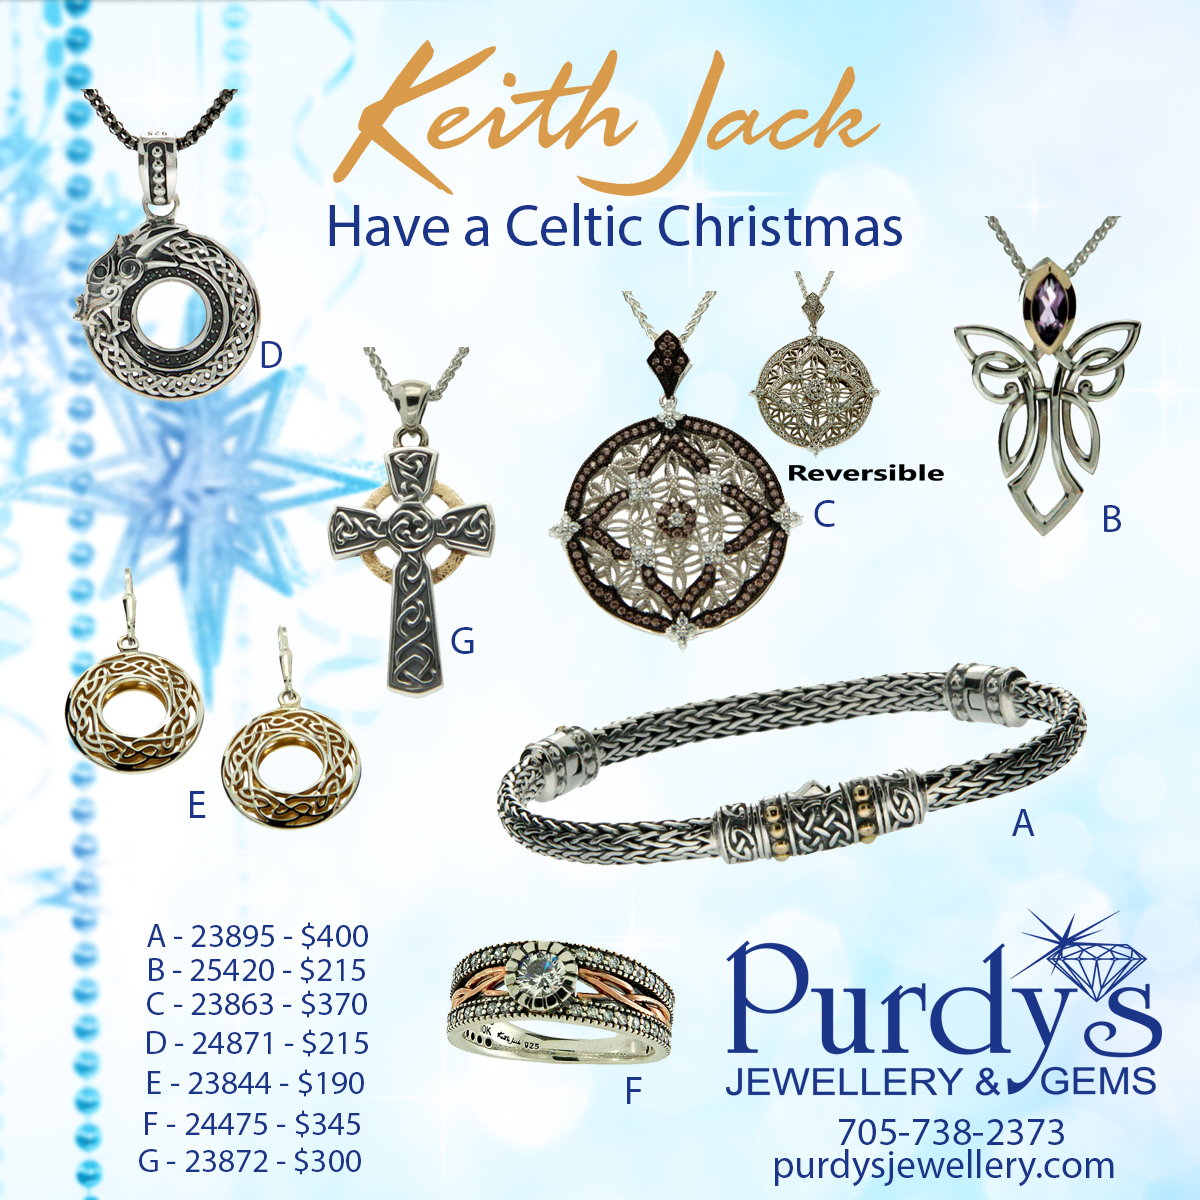 Purdys Jewellery and Gems